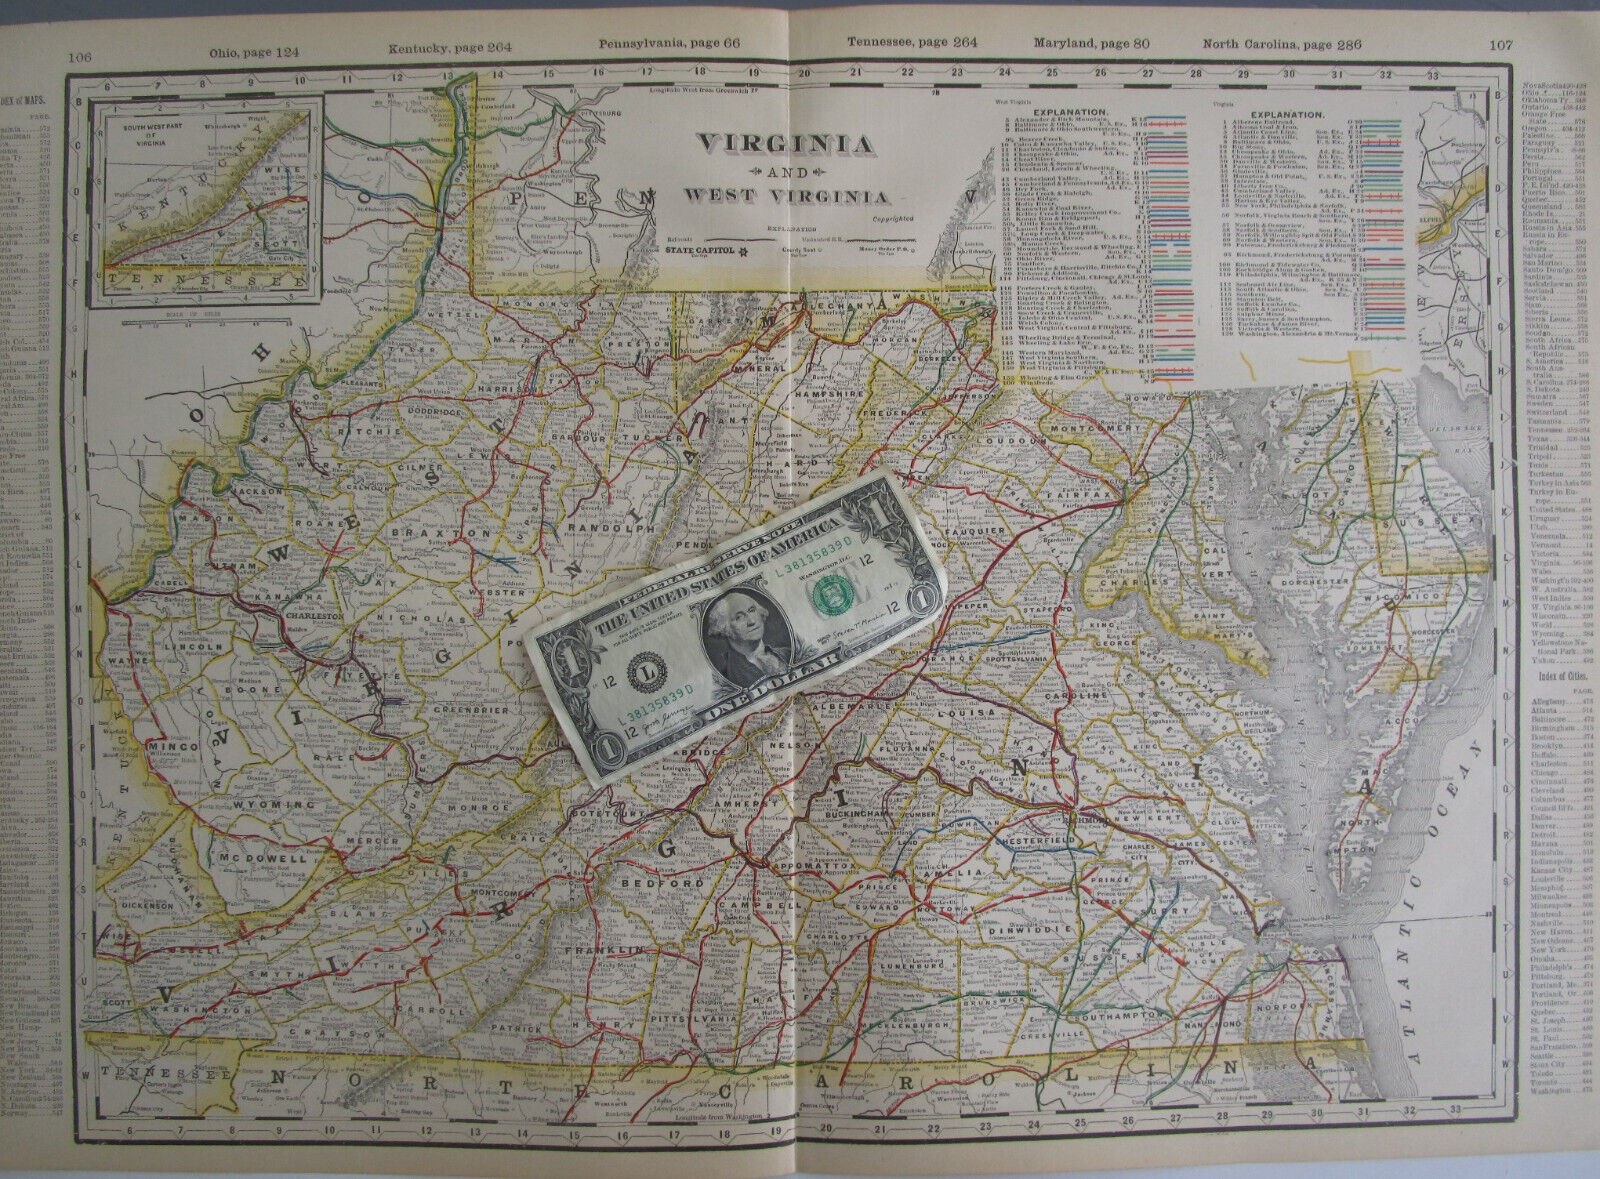 VA WV 1898 VIRGINIA & WEST VIRGINIA Cram RAILROAD Map. KOONS RUN & BRIDGEPORT RR